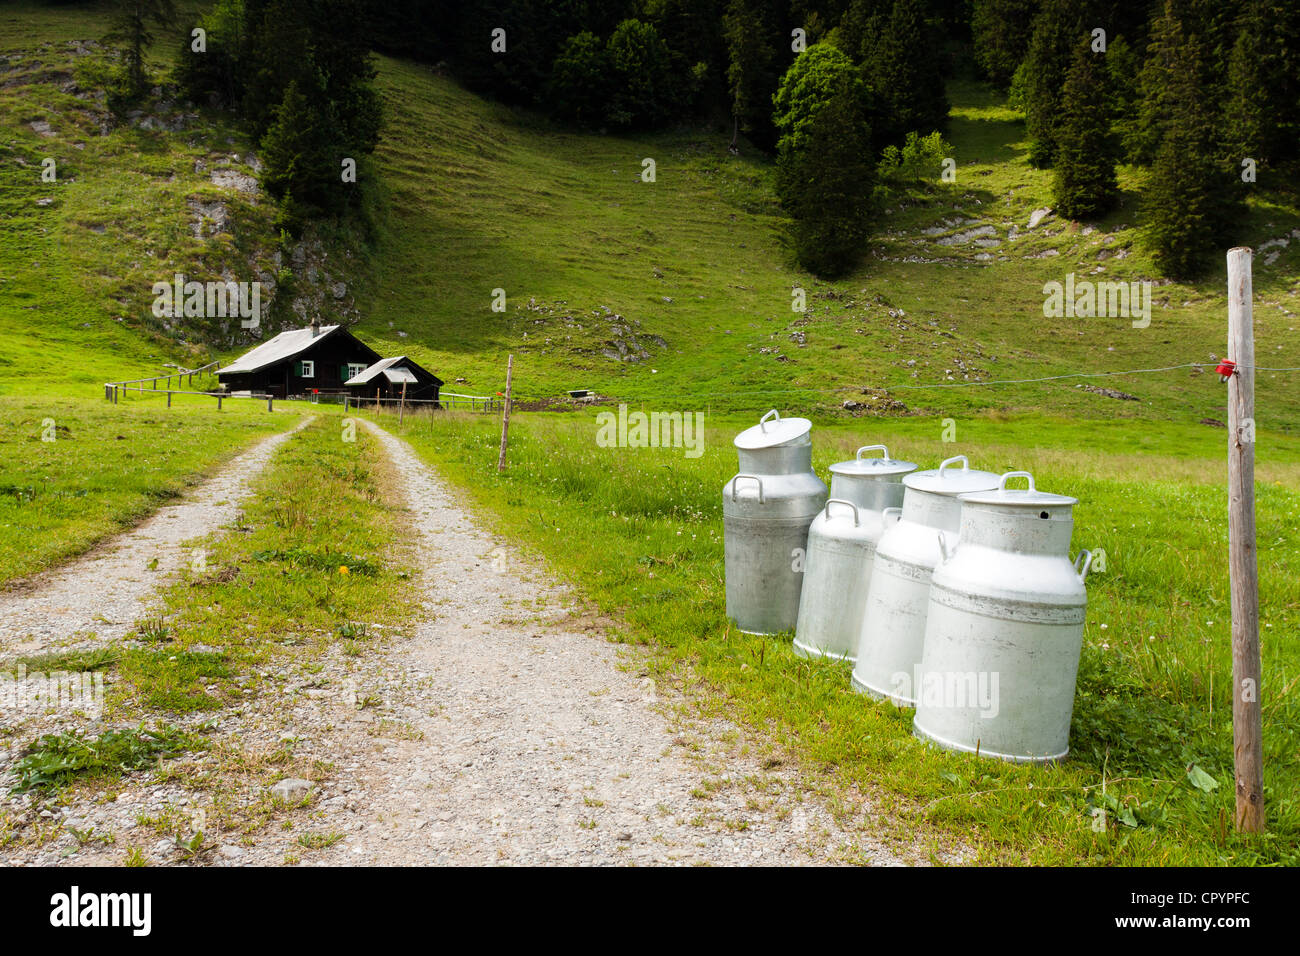 Las latas de leche en un camino que conduce a una cabaña cerca del lago Saemtisersee alpino, 1230m, Bruelisau, Appenzell Rodas Interiores o Innerrhoden Foto de stock